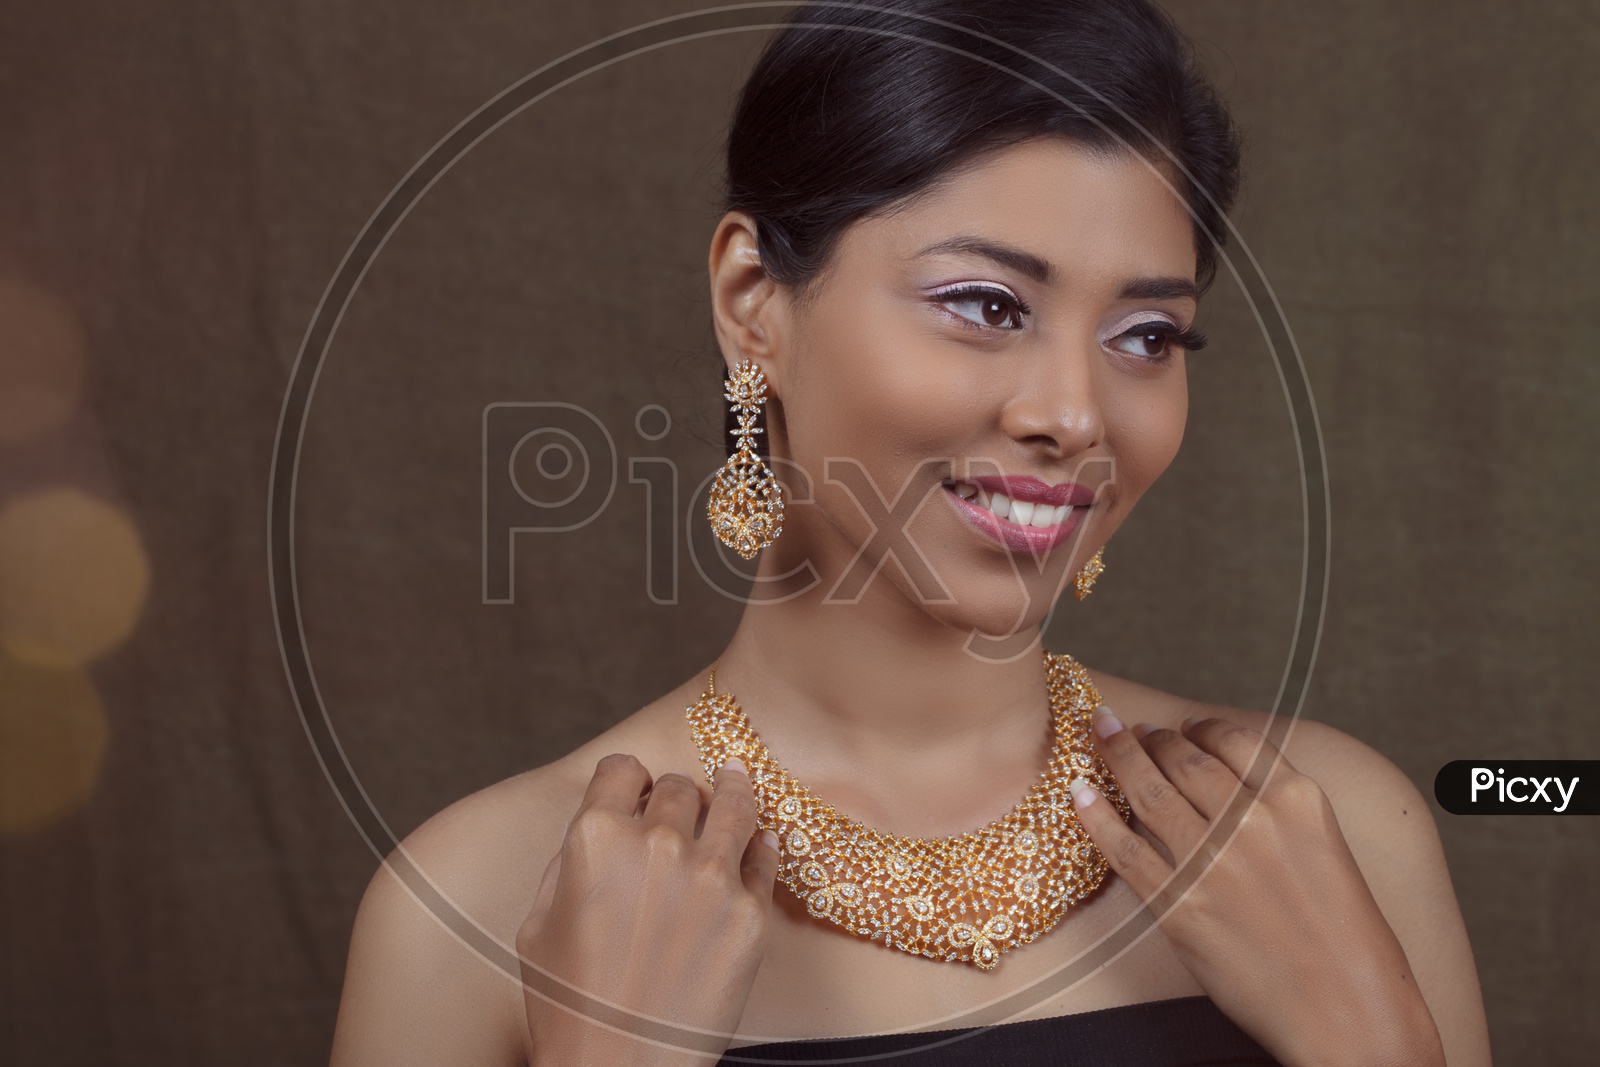 Indian smiling Female Model wearing a Choker necklace & Earrings